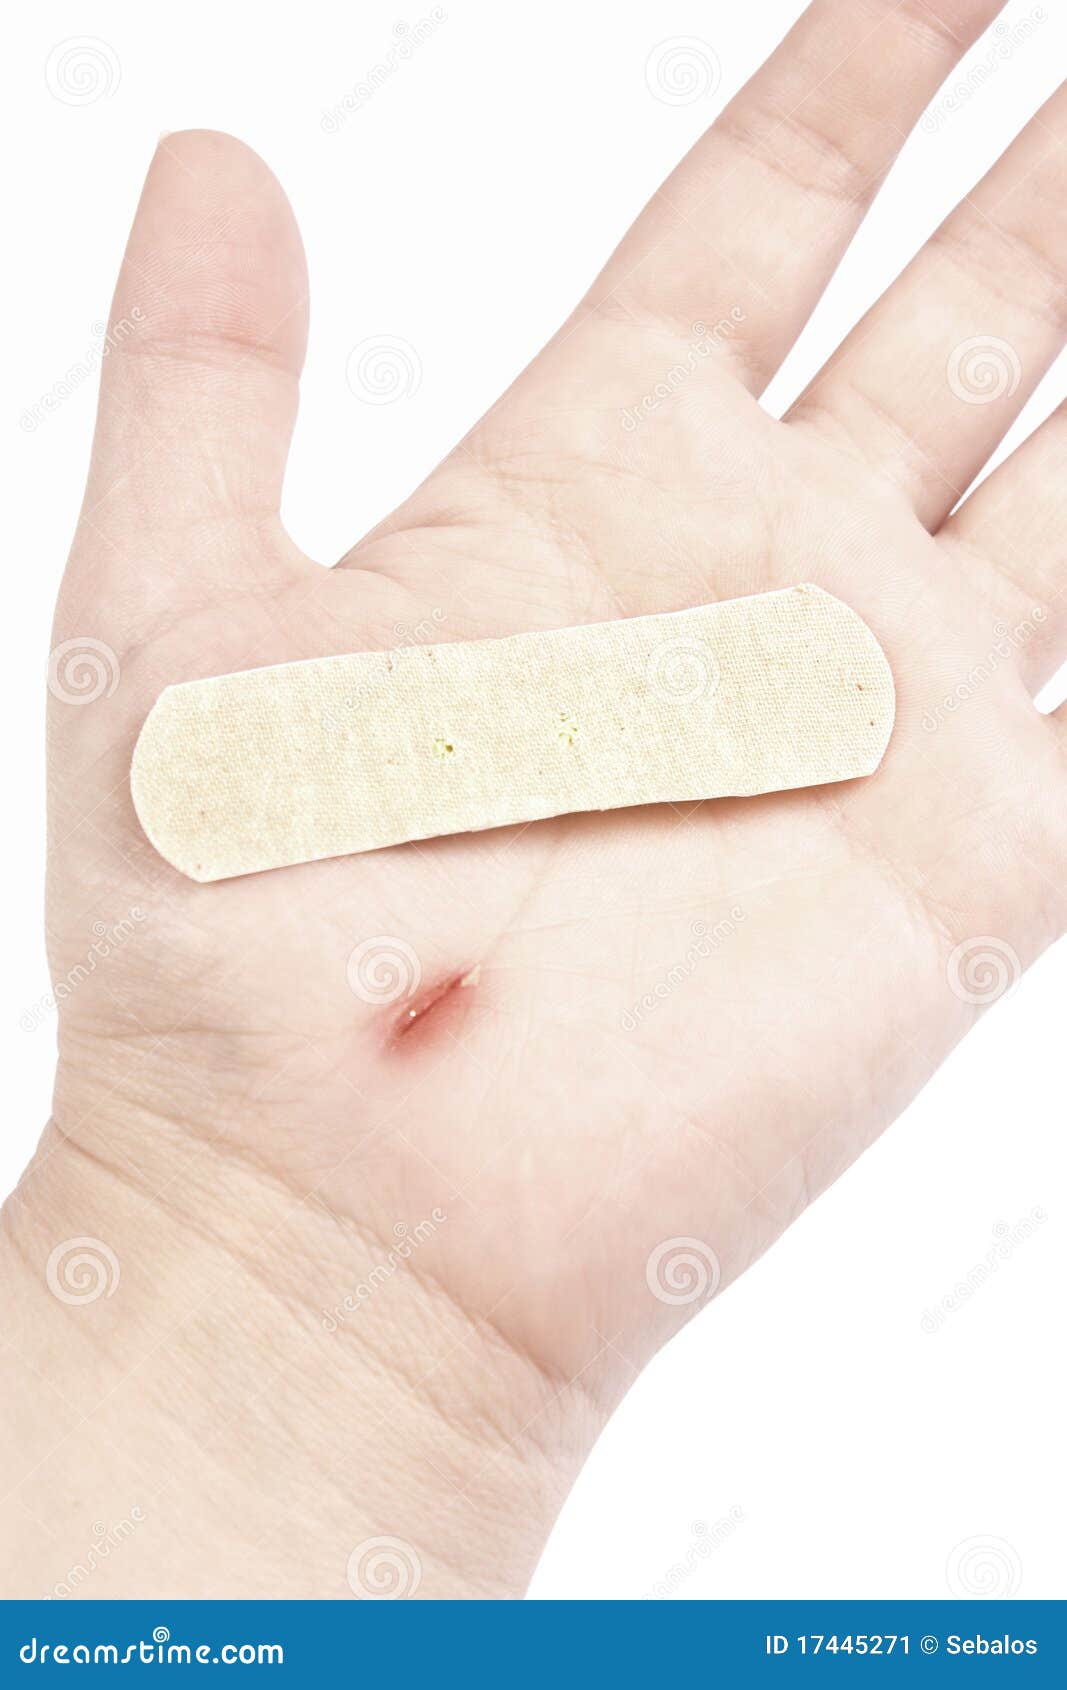 Cut hand with bandage stock image. Image of adhesive - 17445271